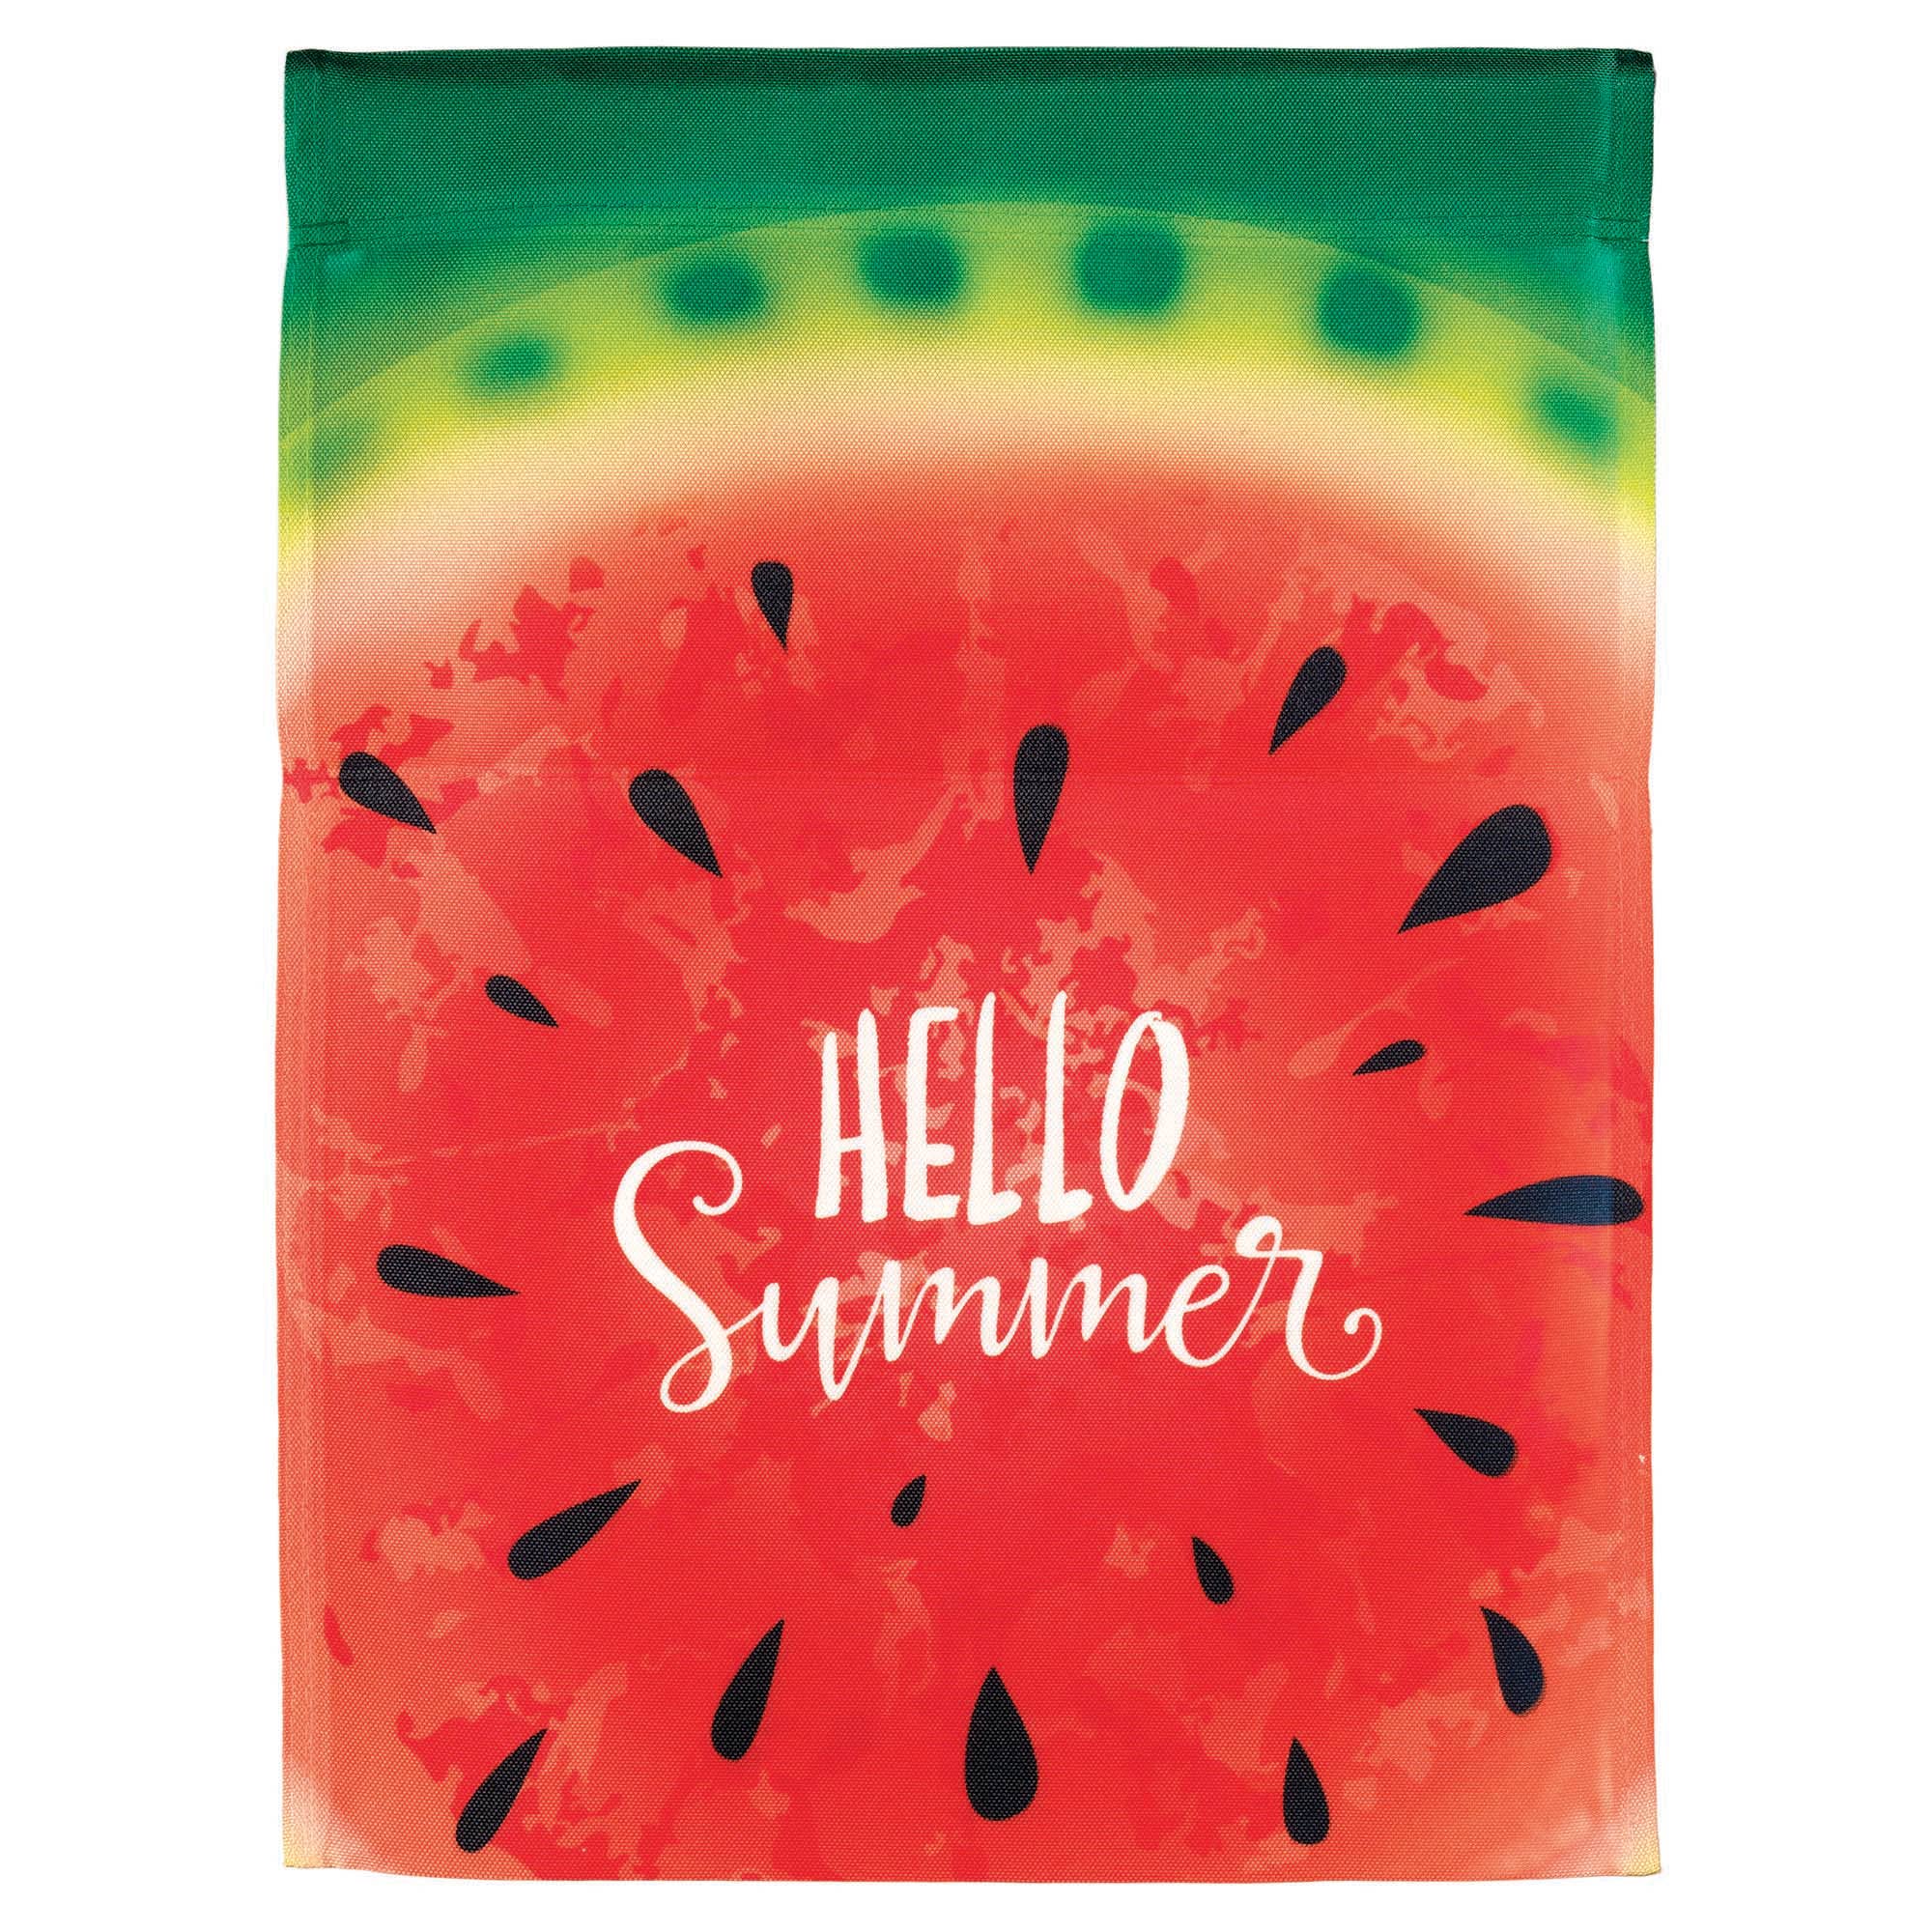 Hello Summer Watermelon Garden Flag